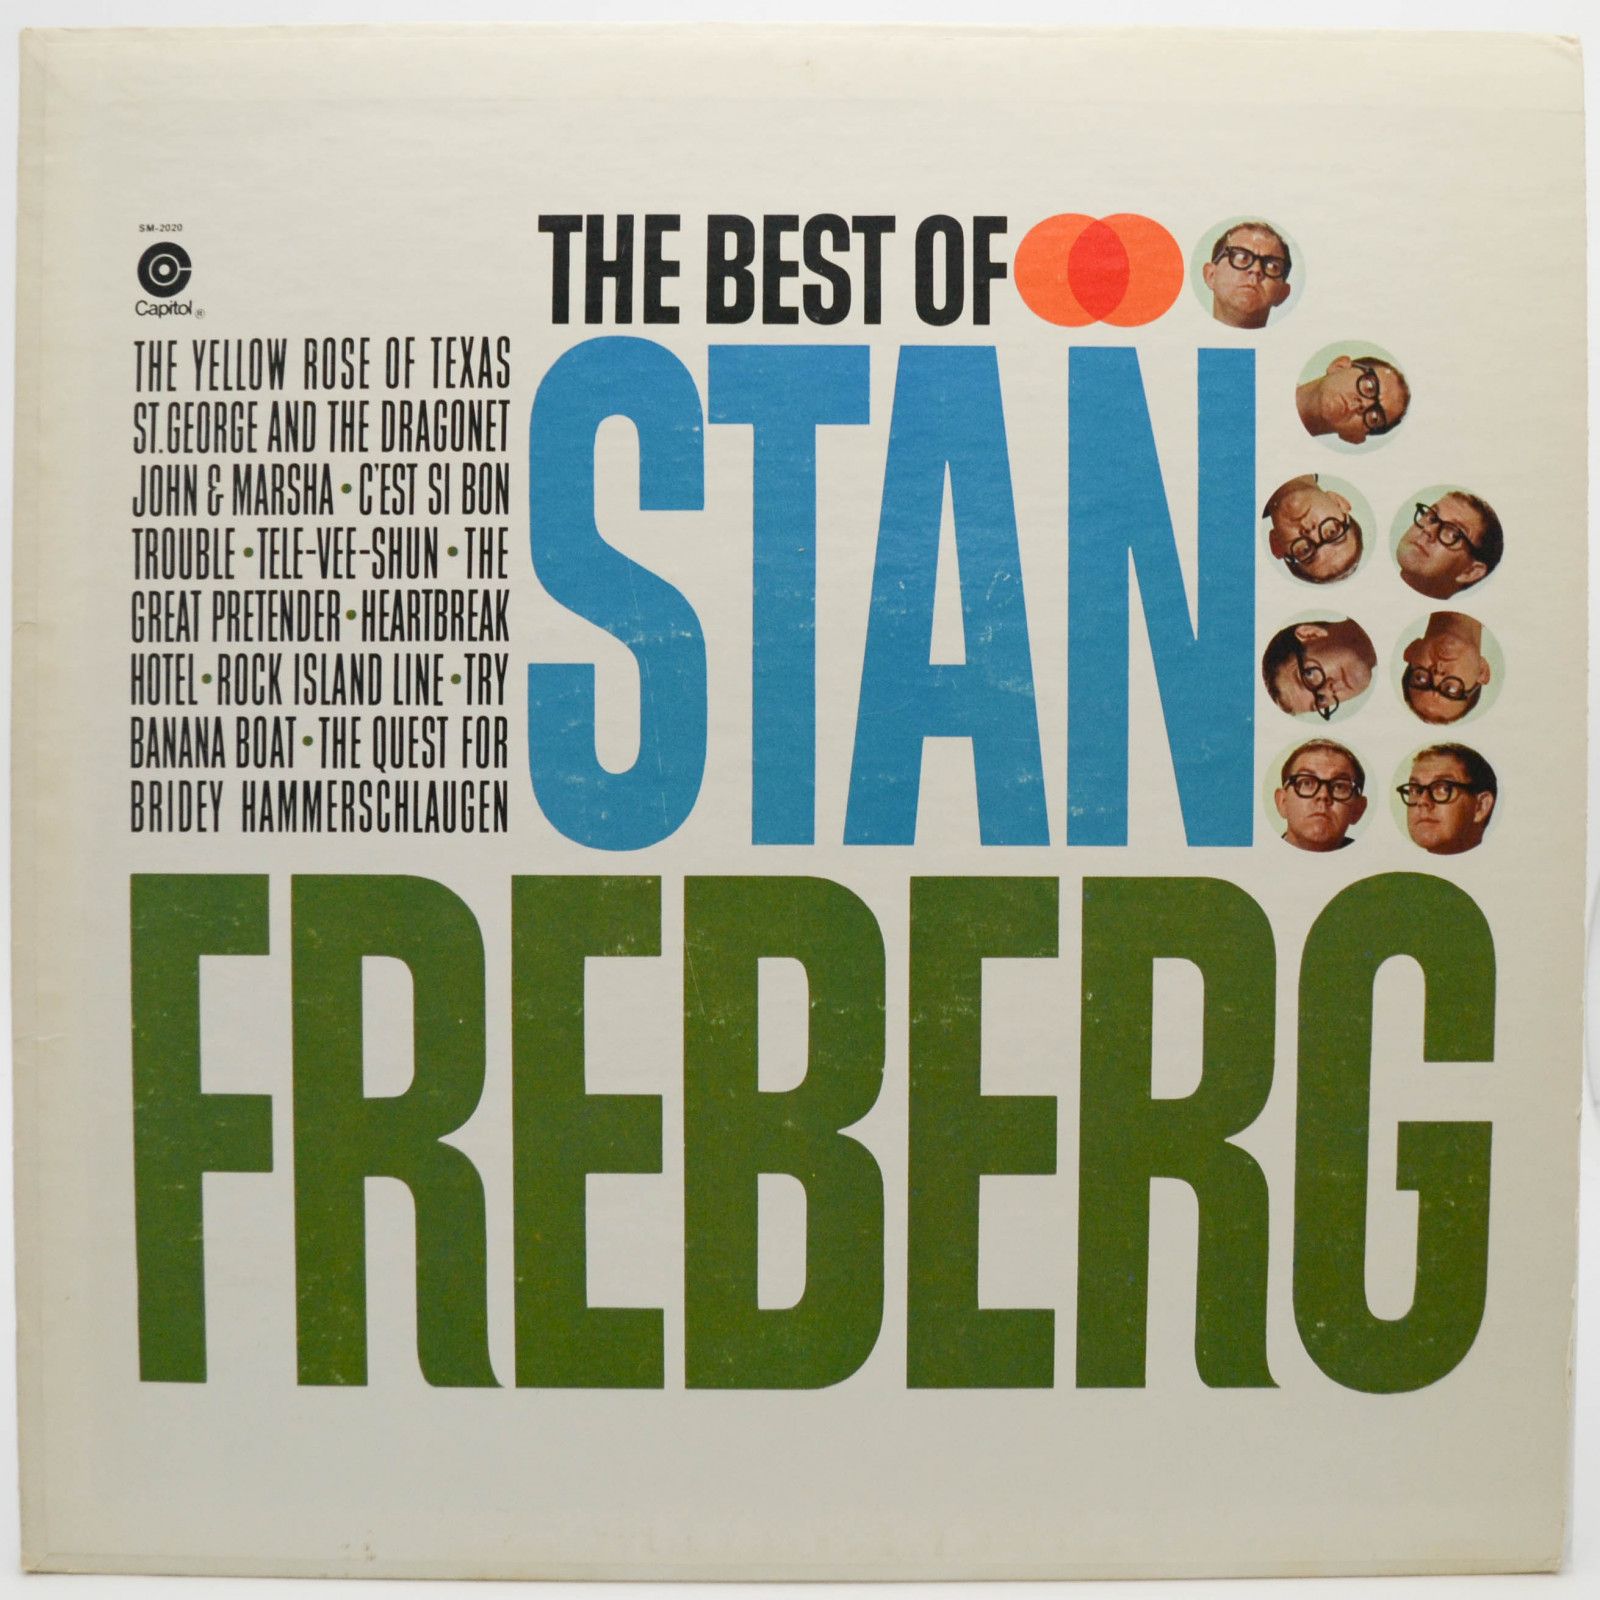 Stan Freberg — The Best Of Stan Freberg (USA), 1963